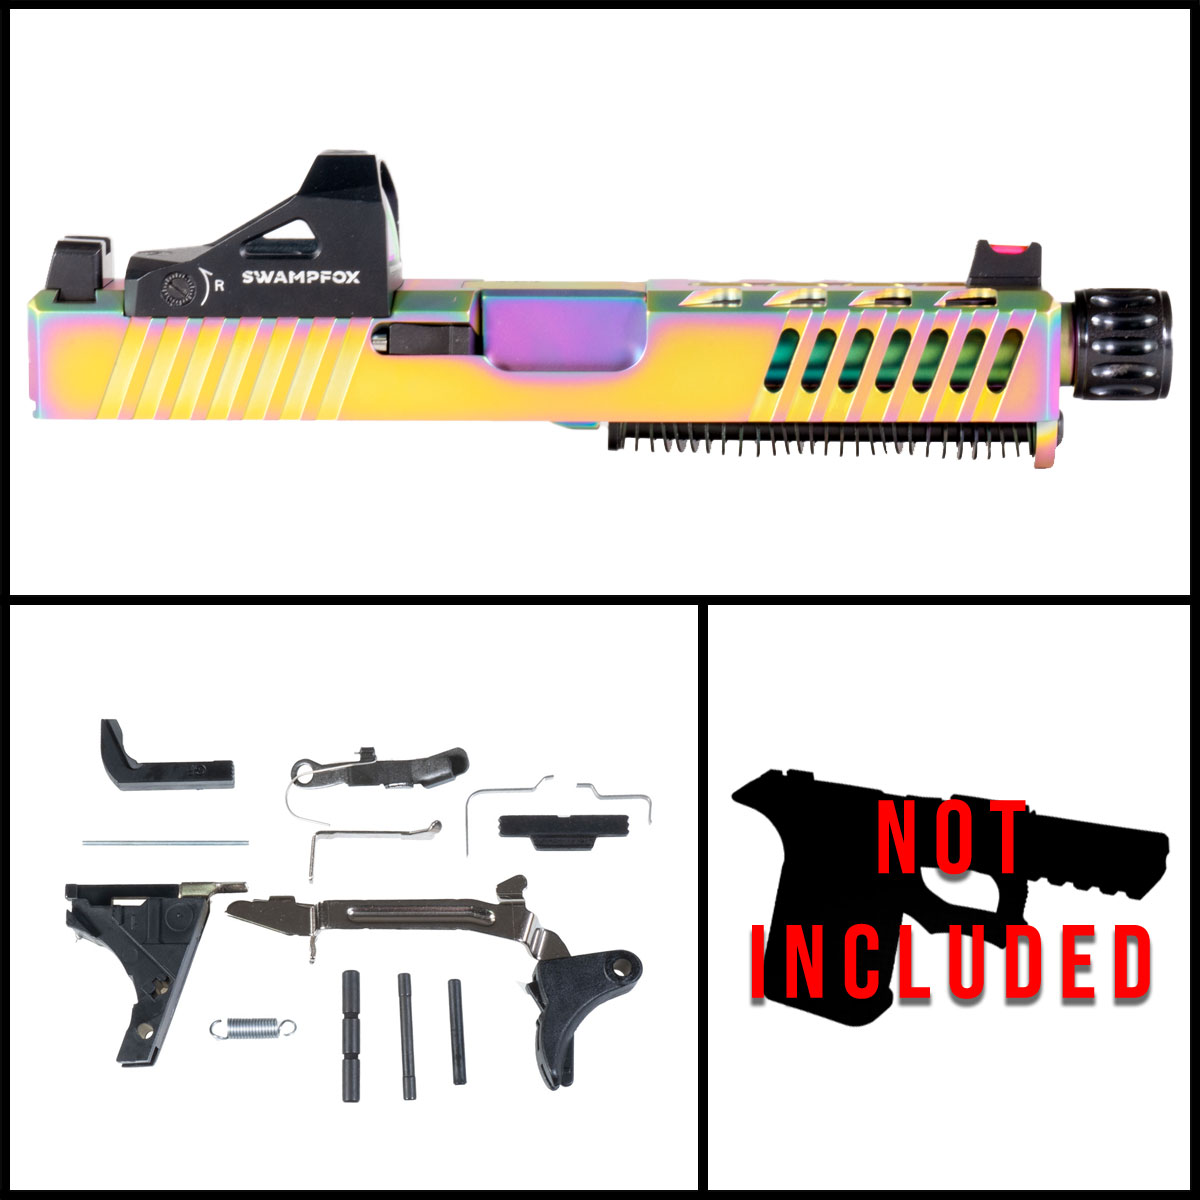 DTT 'Lumina w/ Swampfox Justice RMR' 9mm Full Pistol Build Kits (Everything Minus Frame) - Glock 19 Gen 1-2 Compatible